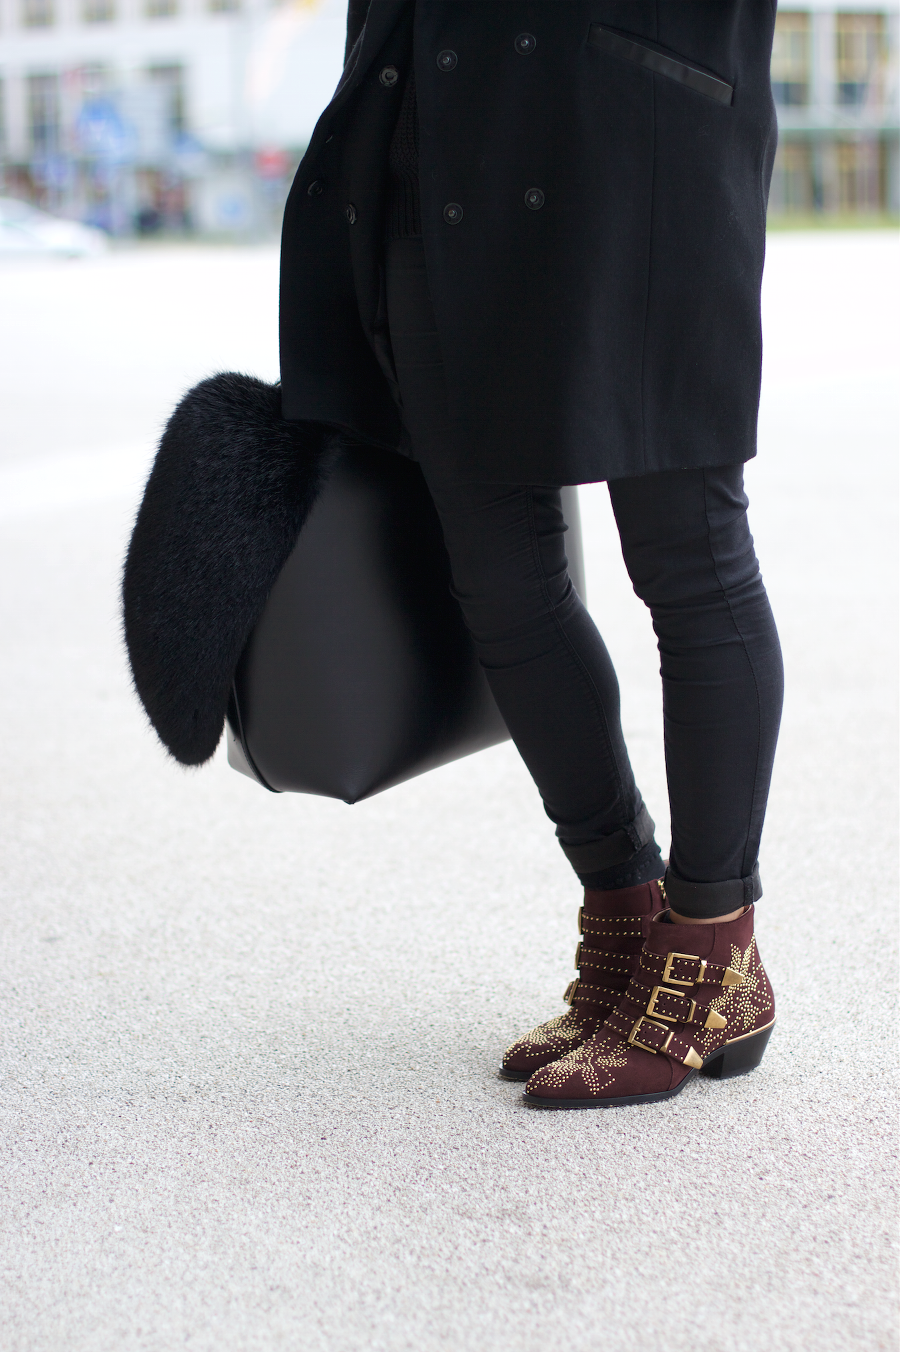 Chloe Susanna Boots Black Outfit Idea